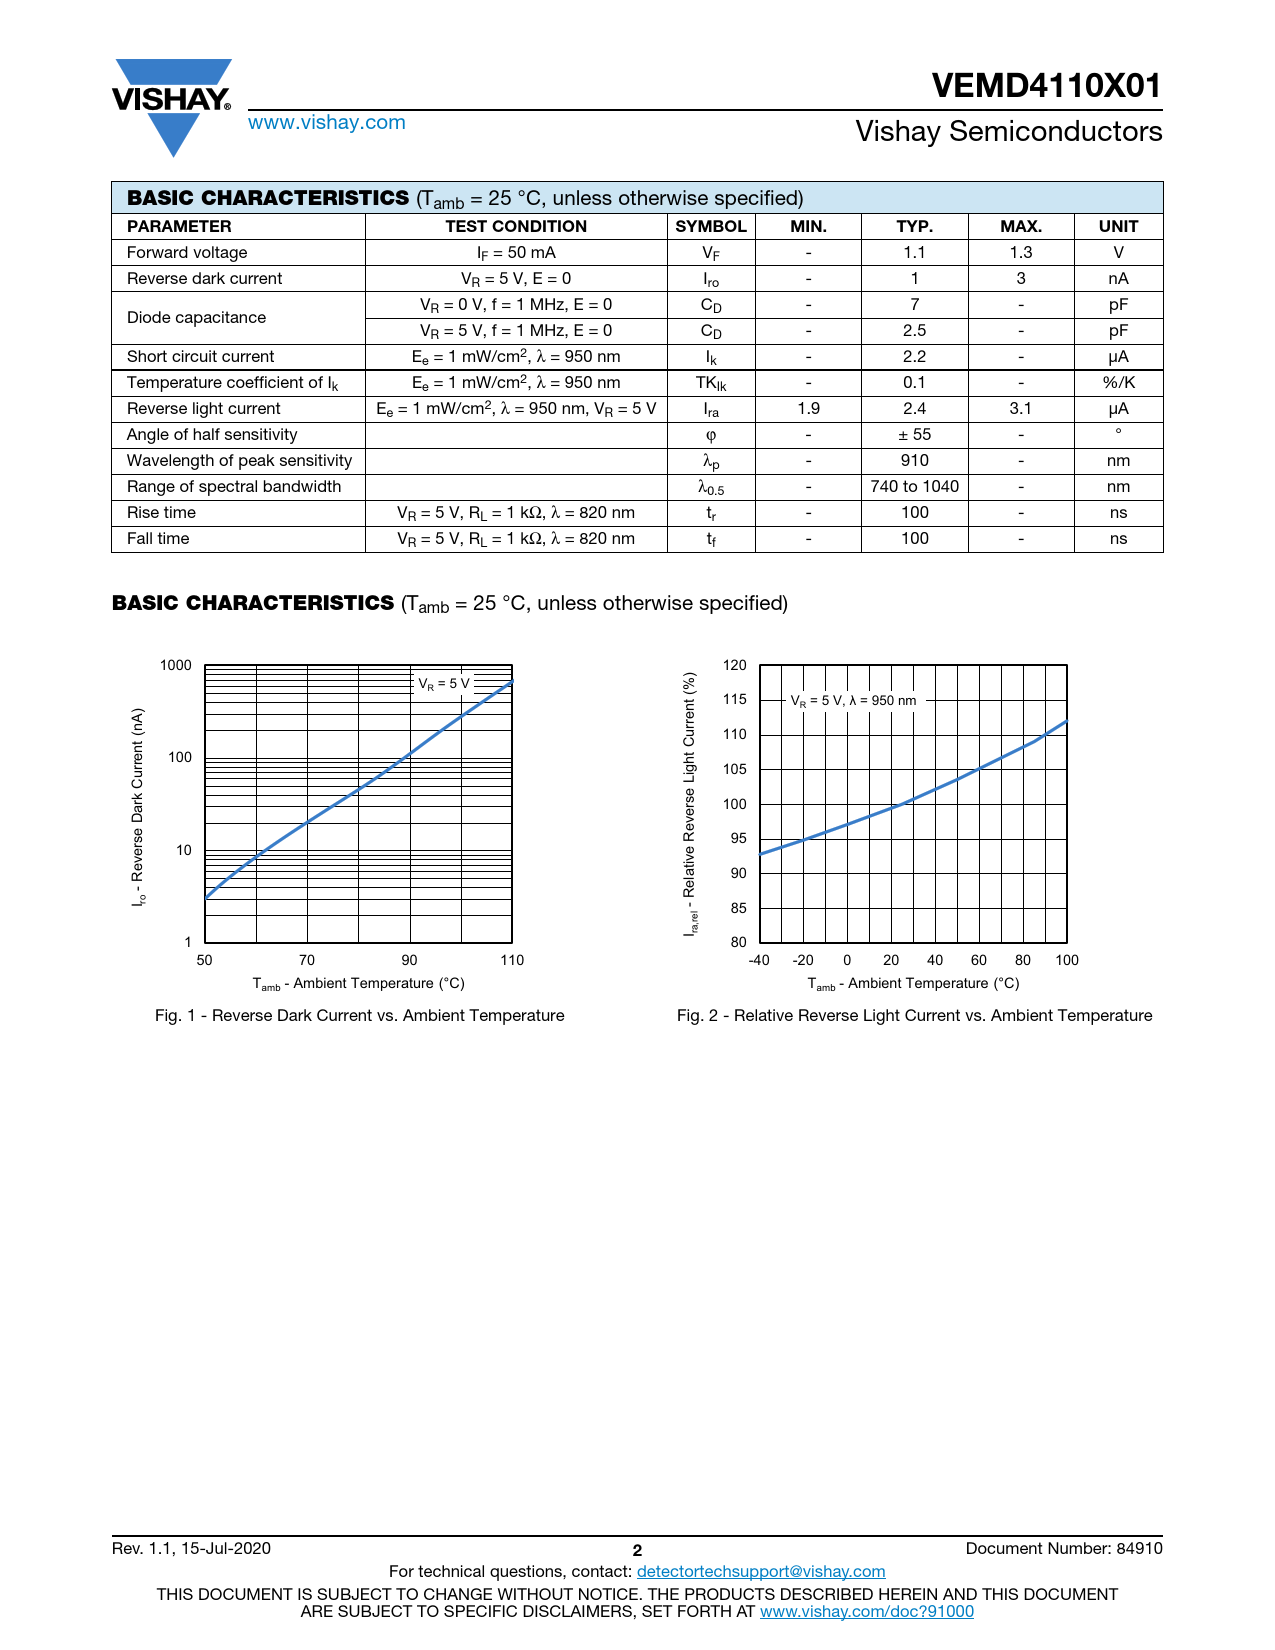 VEMD4110X01 BASIC CHARACTERISTICS PARAMETER TEST CONDITION SYMBOL MIN TYP MAX UNIT